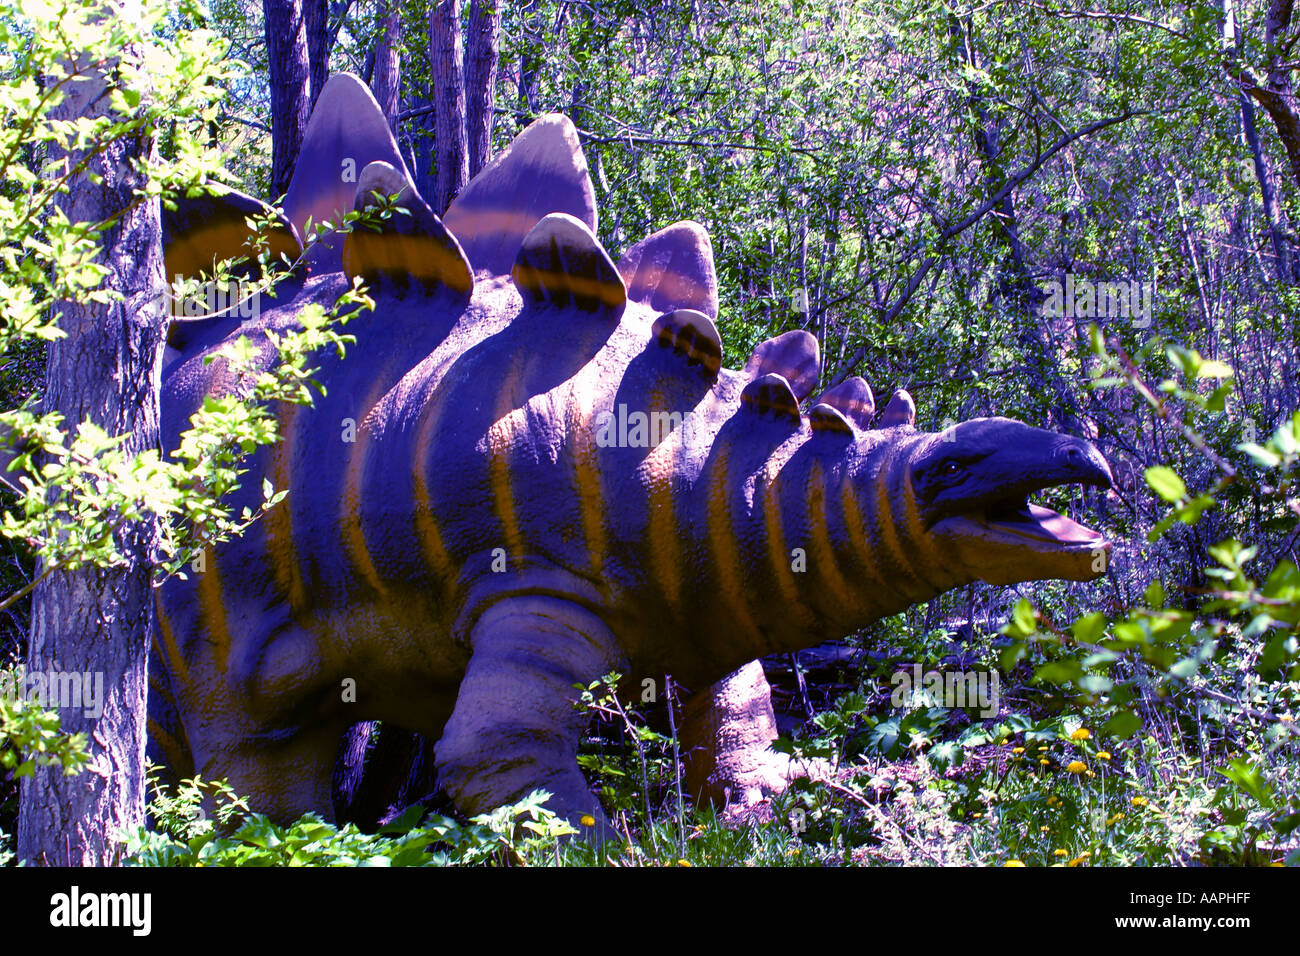 STEGOSAURUS Dinosaur Prehistoric Park animal sculptures inland sea and volcanic mountains at Calgary Alberta Canada Stock Photo